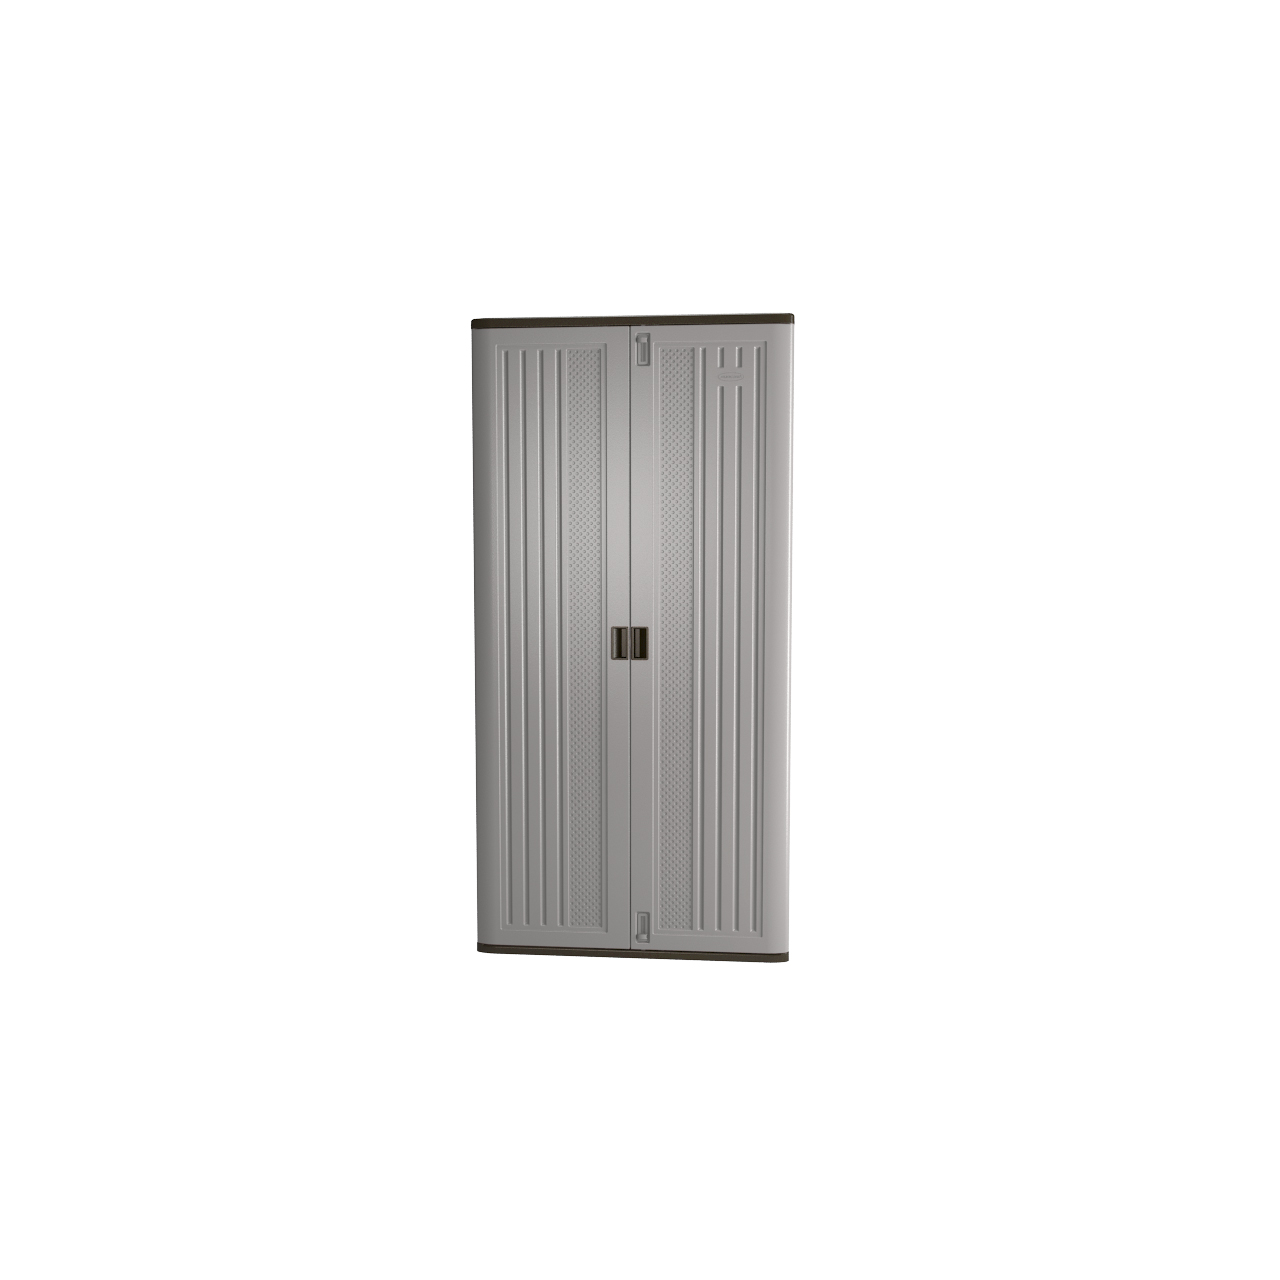 Suncast Plastic Freestanding Garage Cabinet in Gray (40-in W x 80.25-in H x  20.25-in D) at